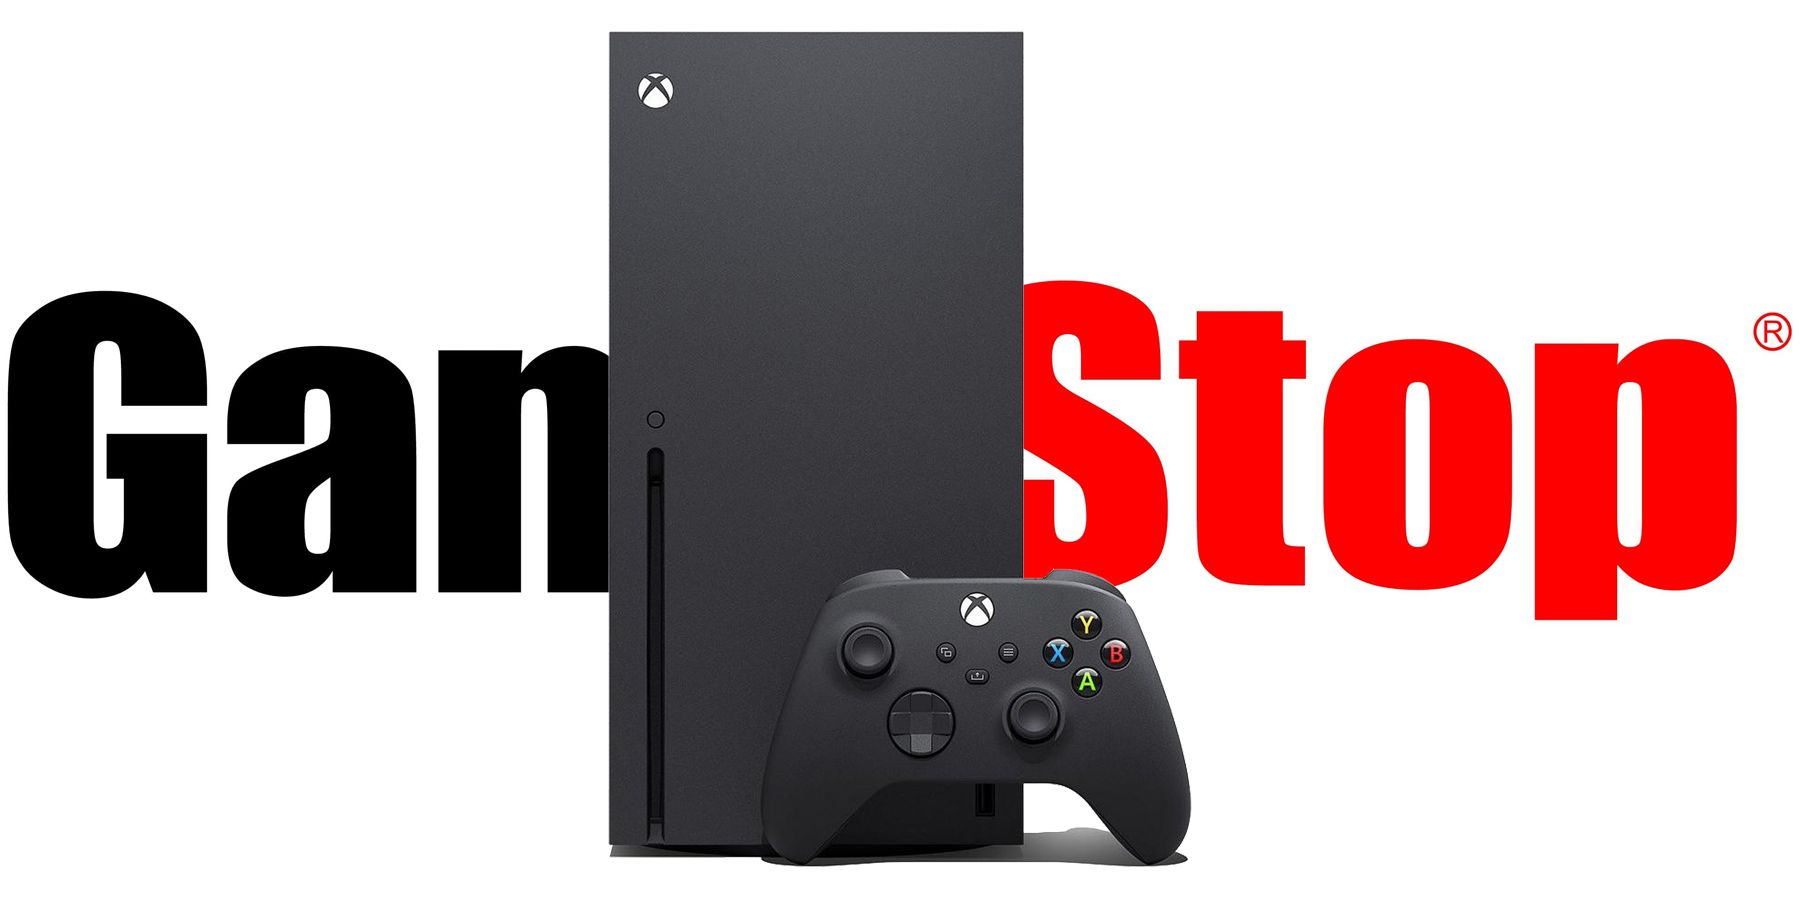 Xbox Series X in front of GameStop logo